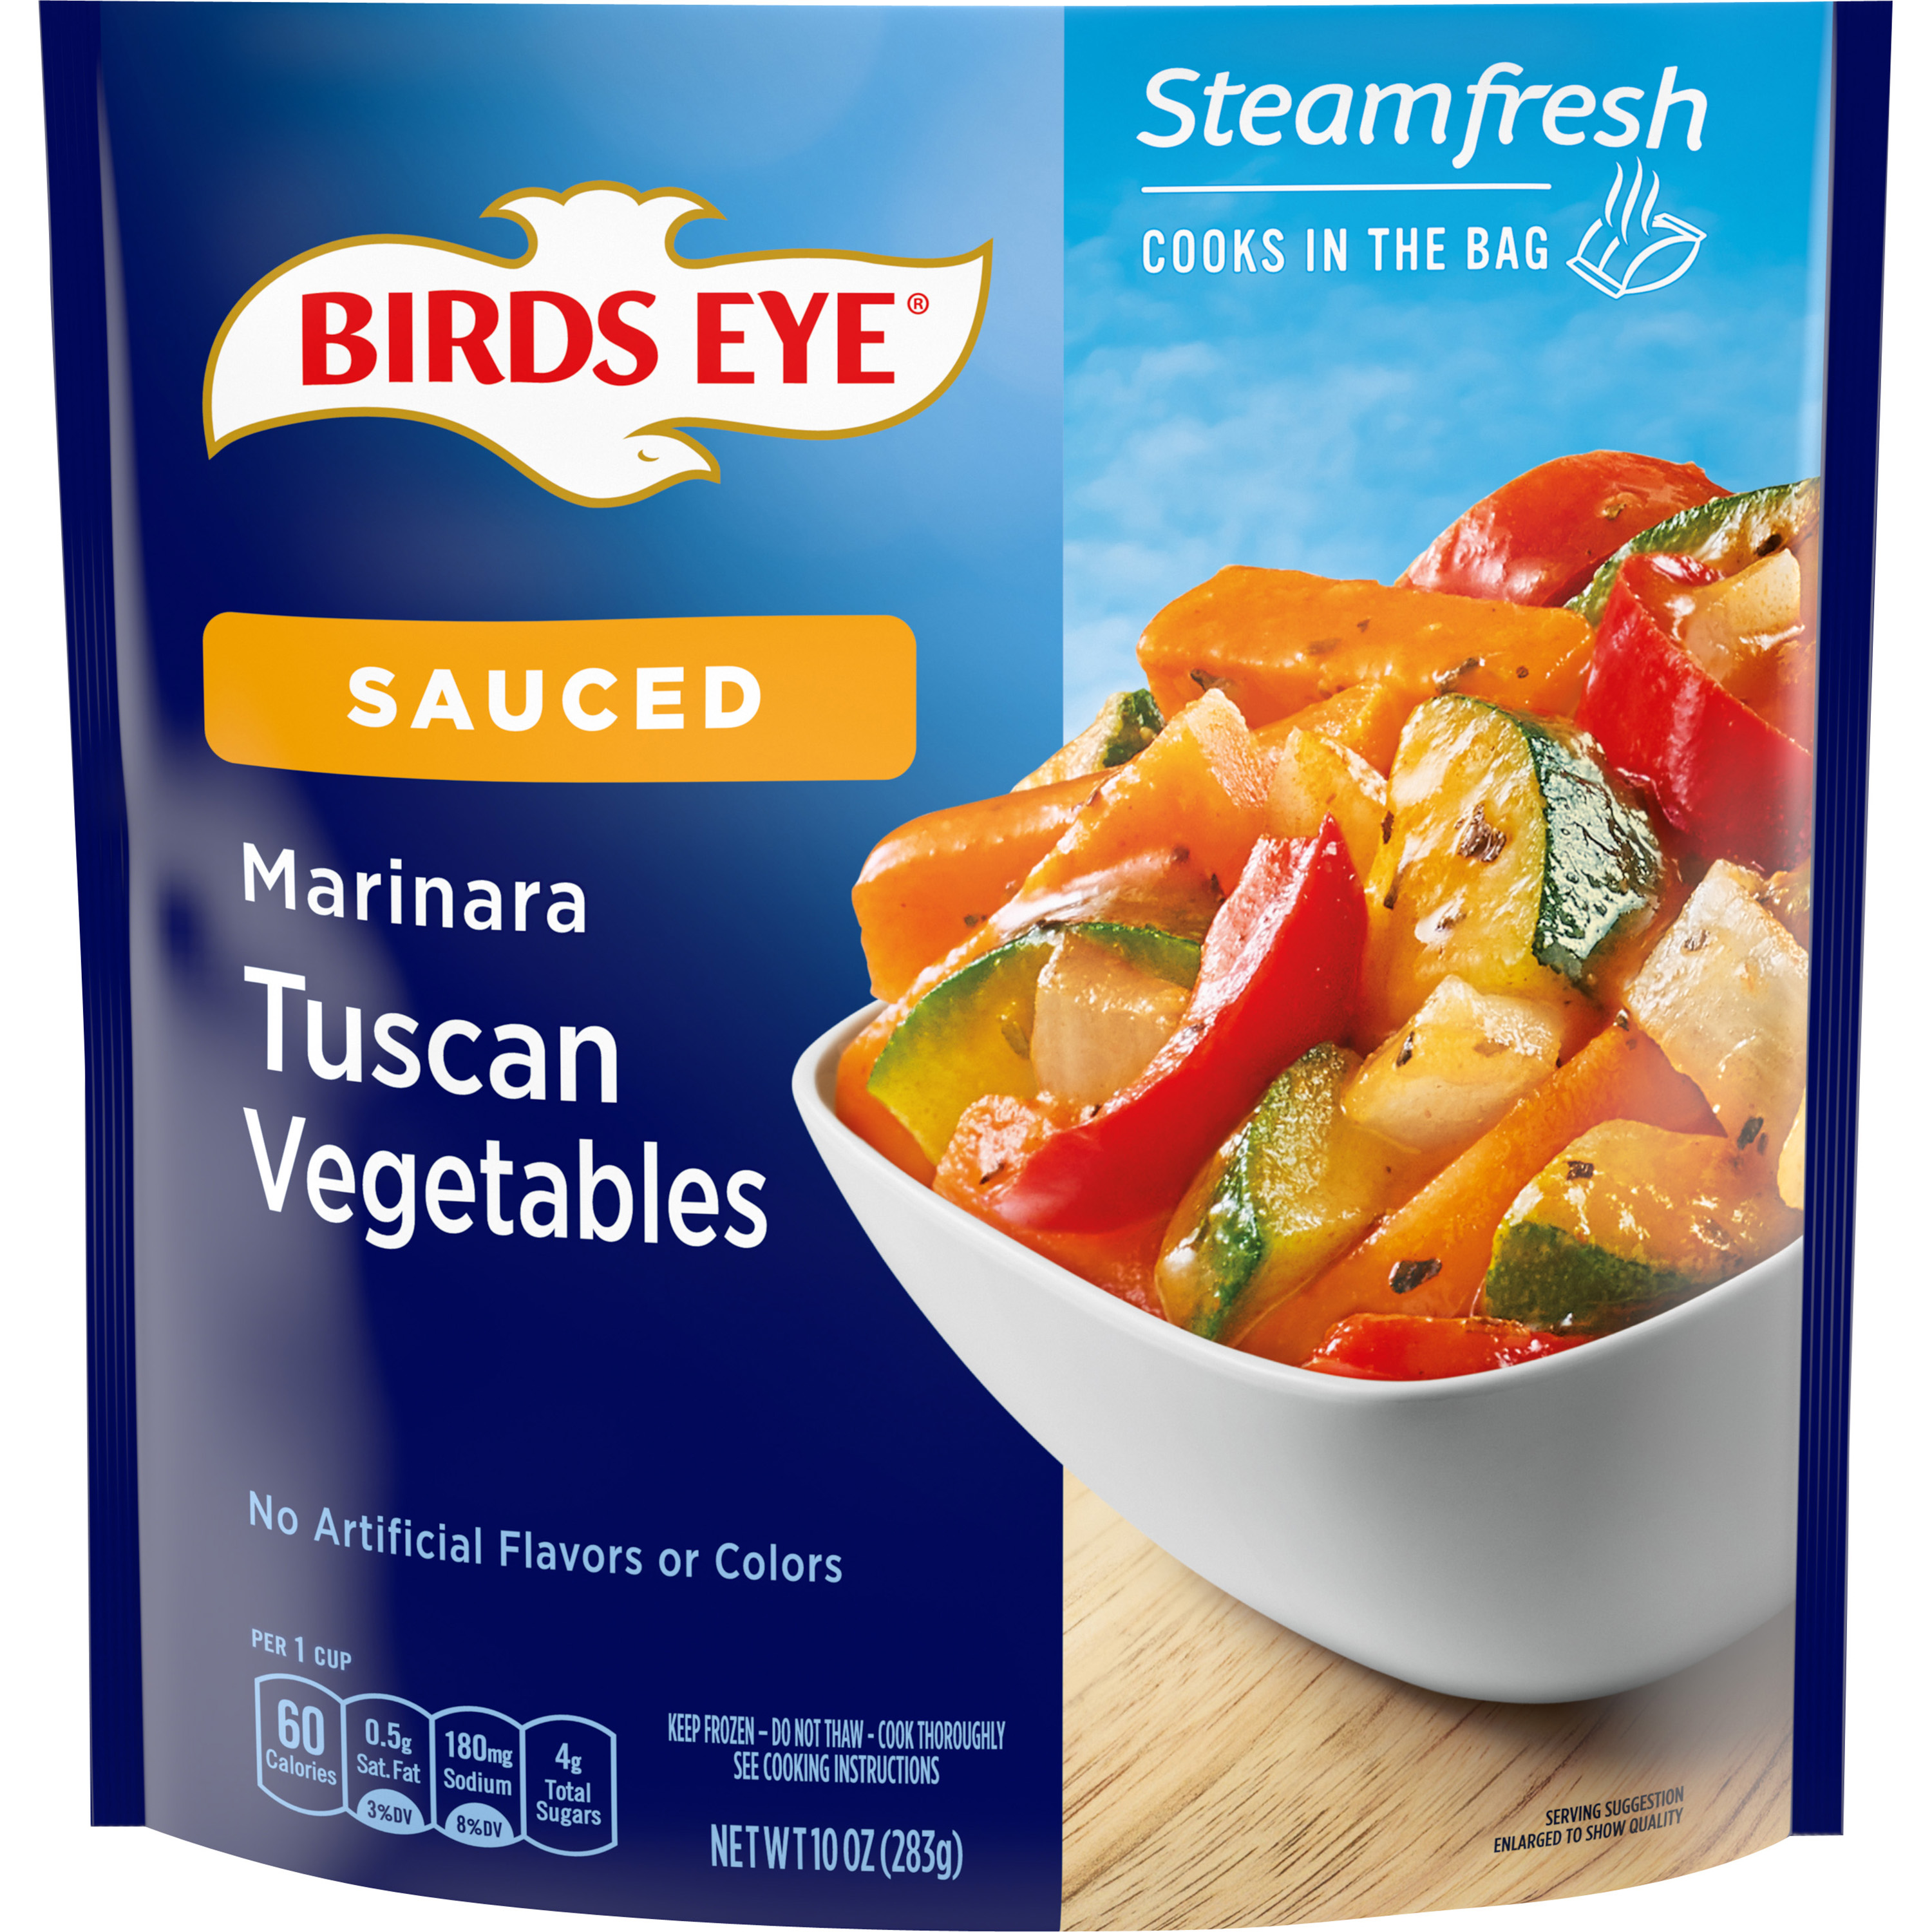 Birds Eye Steamfresh Chef’s Favorites Lightly Sauced Tuscan Vegetables with Marinara Sauce